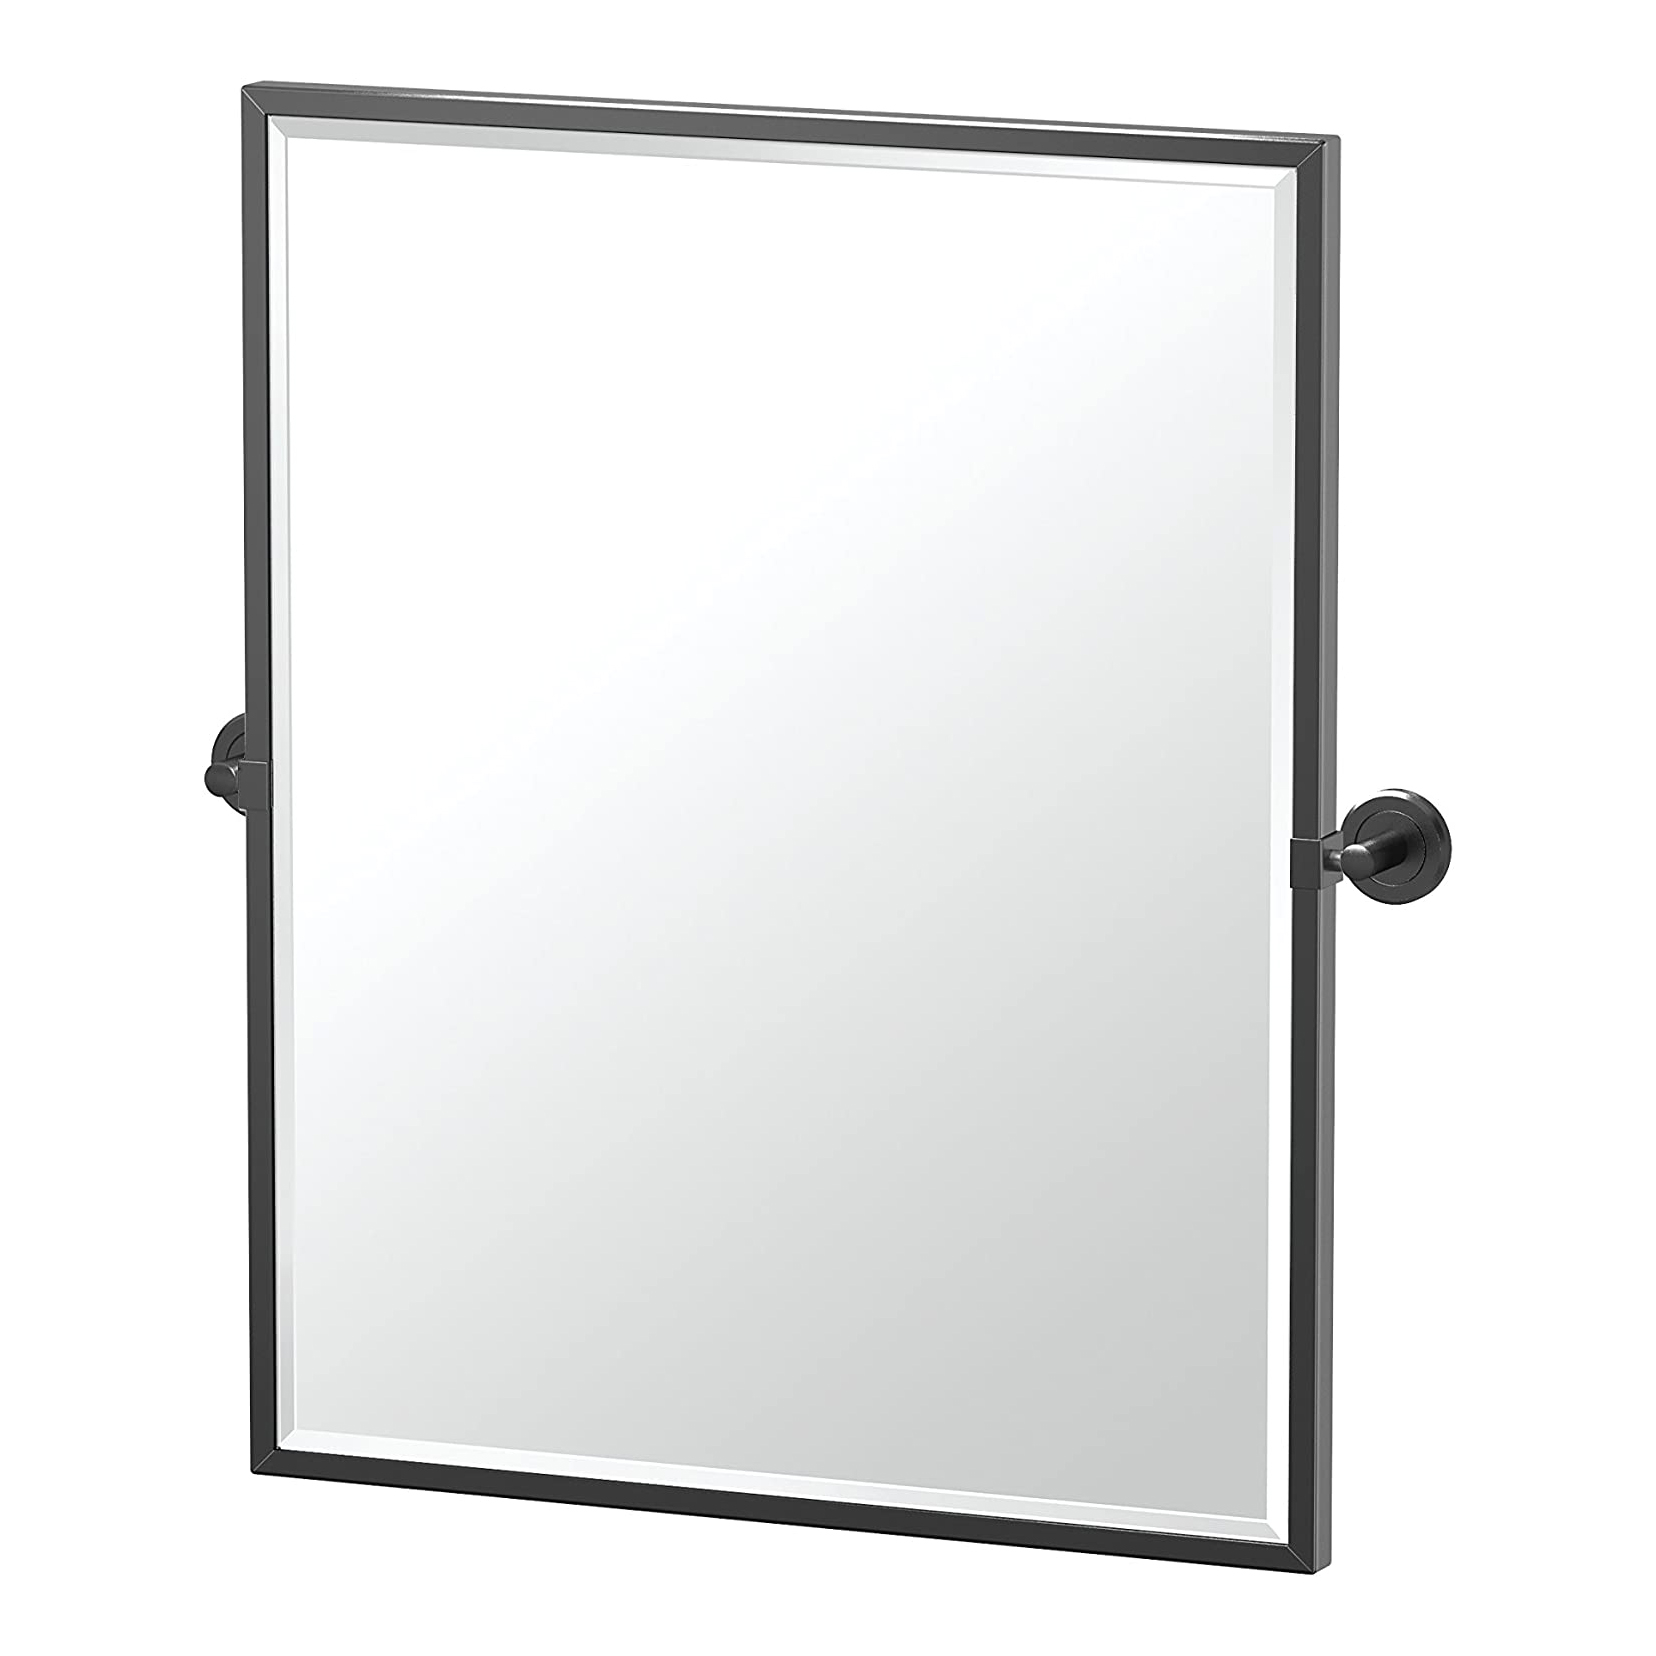 Latitude2 20-1/2x25" Pivoting Framed Rectangle Mirror, Black